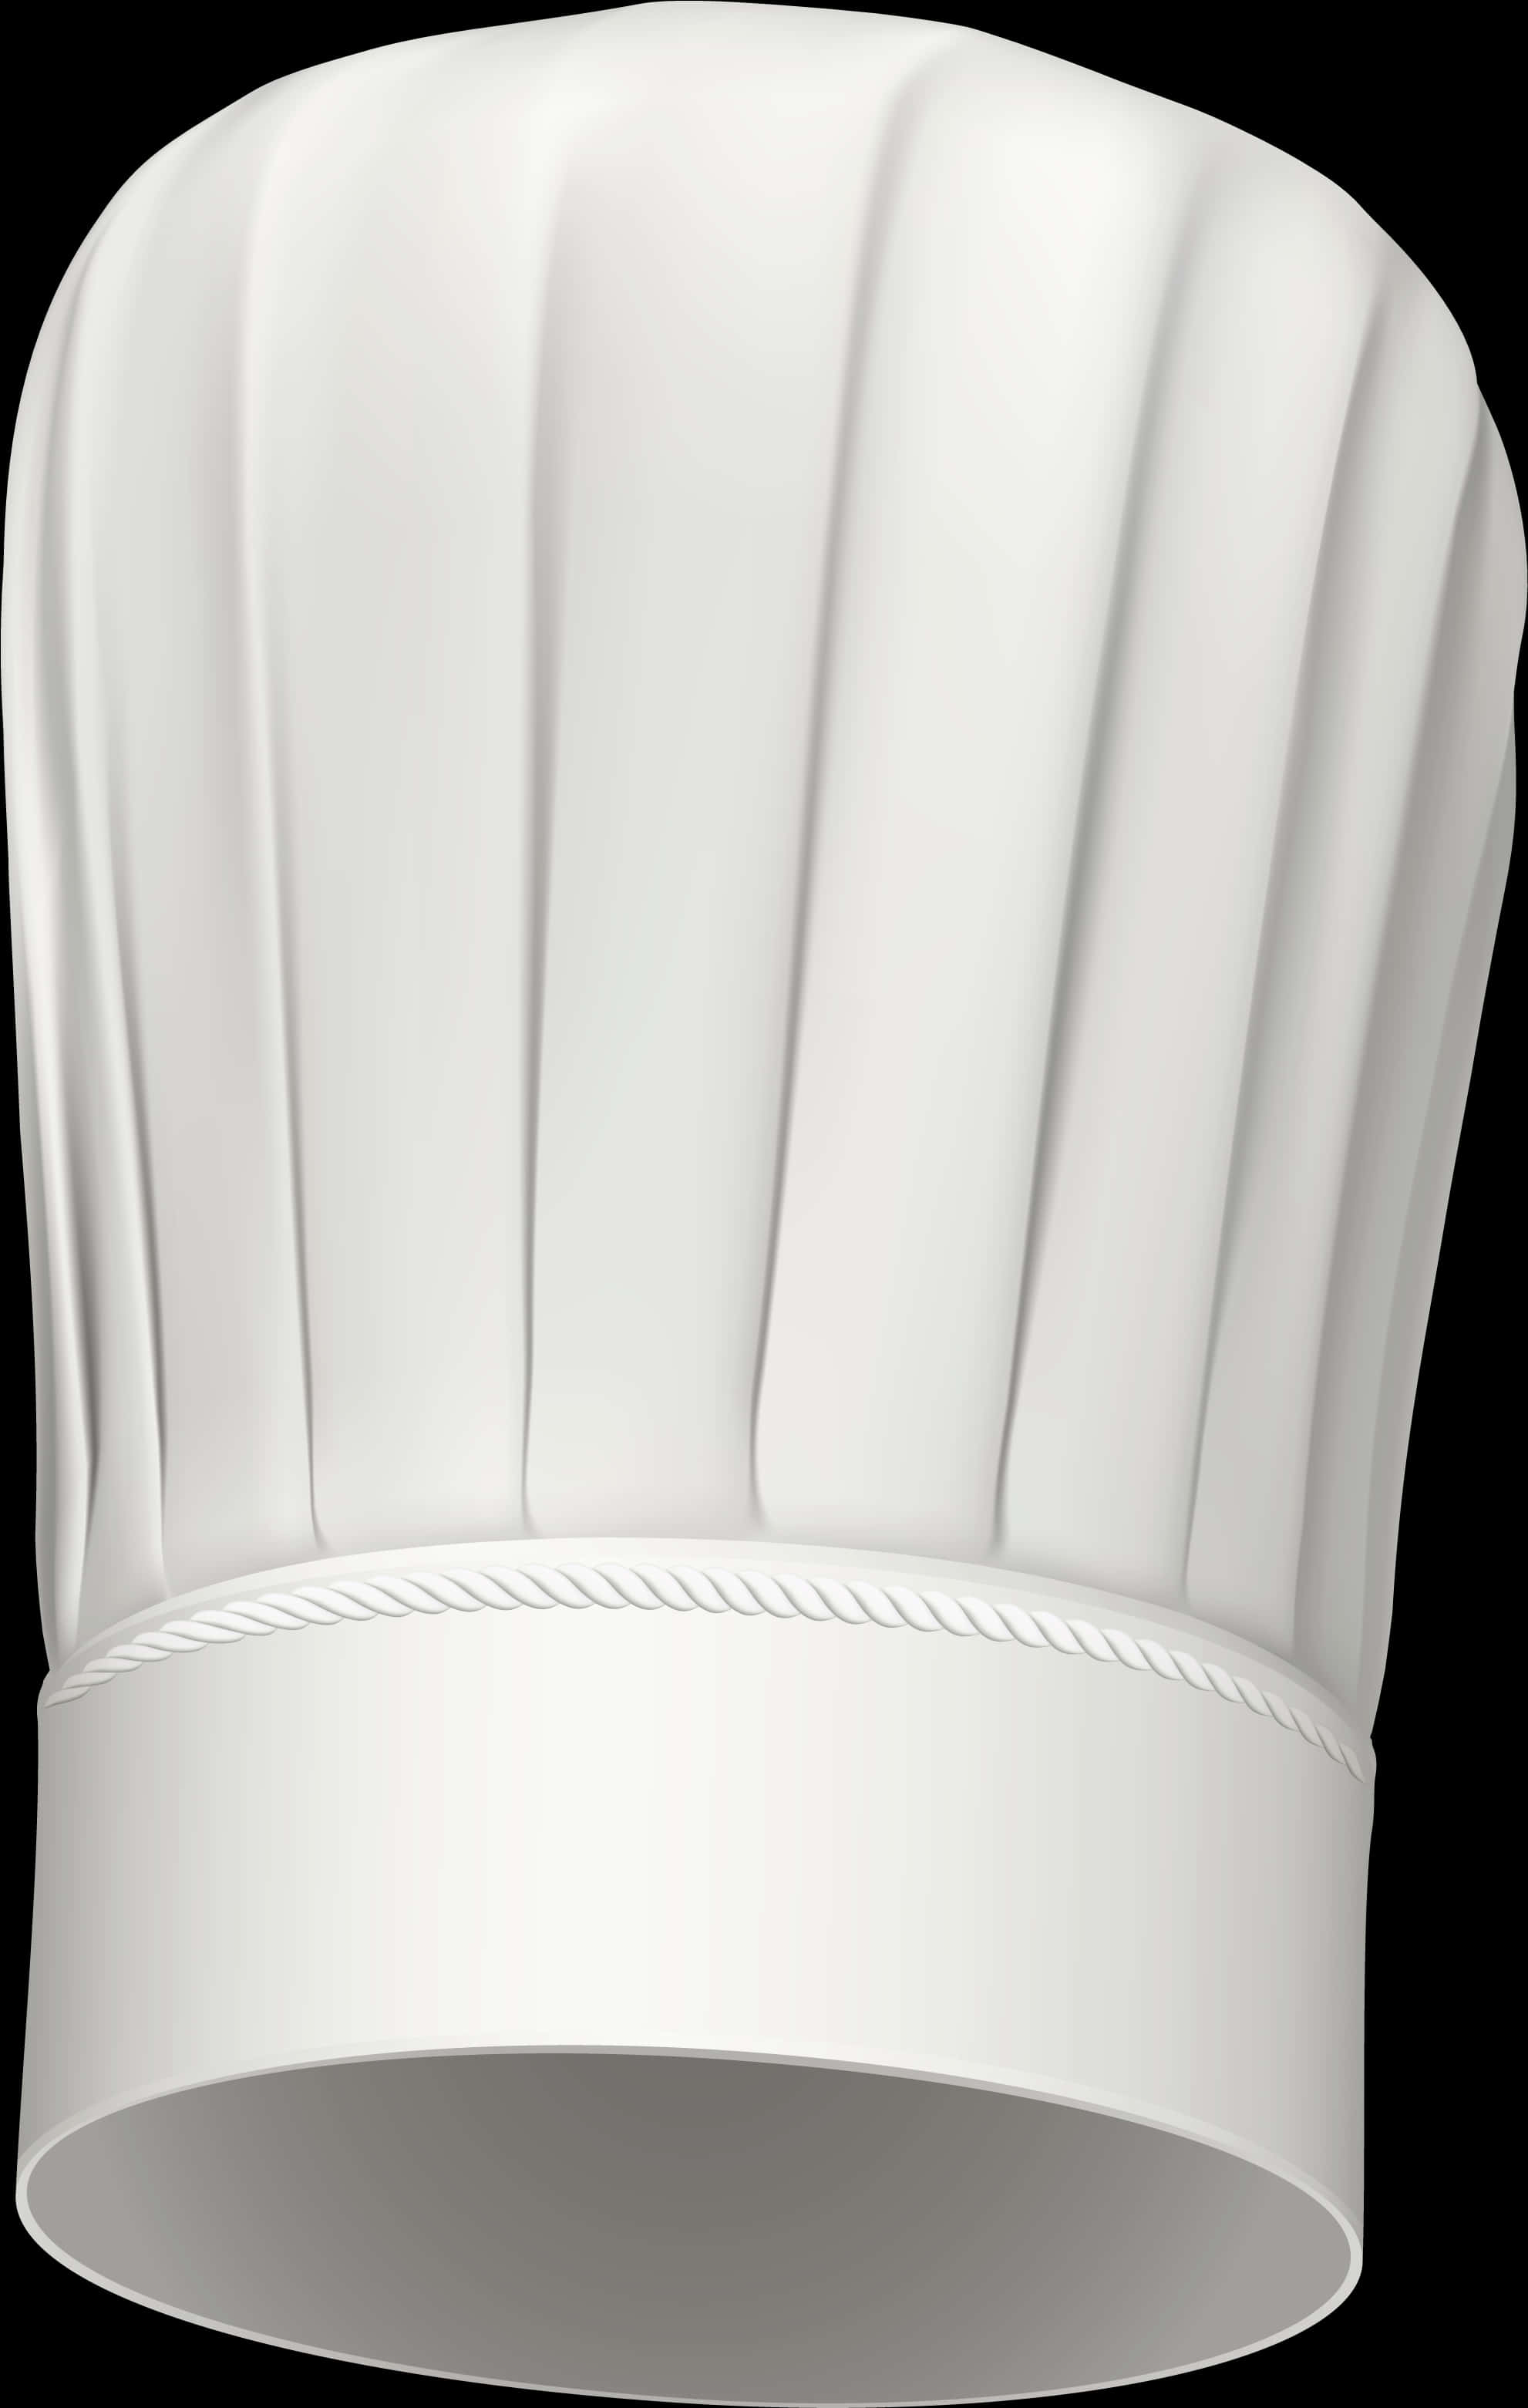 Professional Chef Hat White Background.jpg